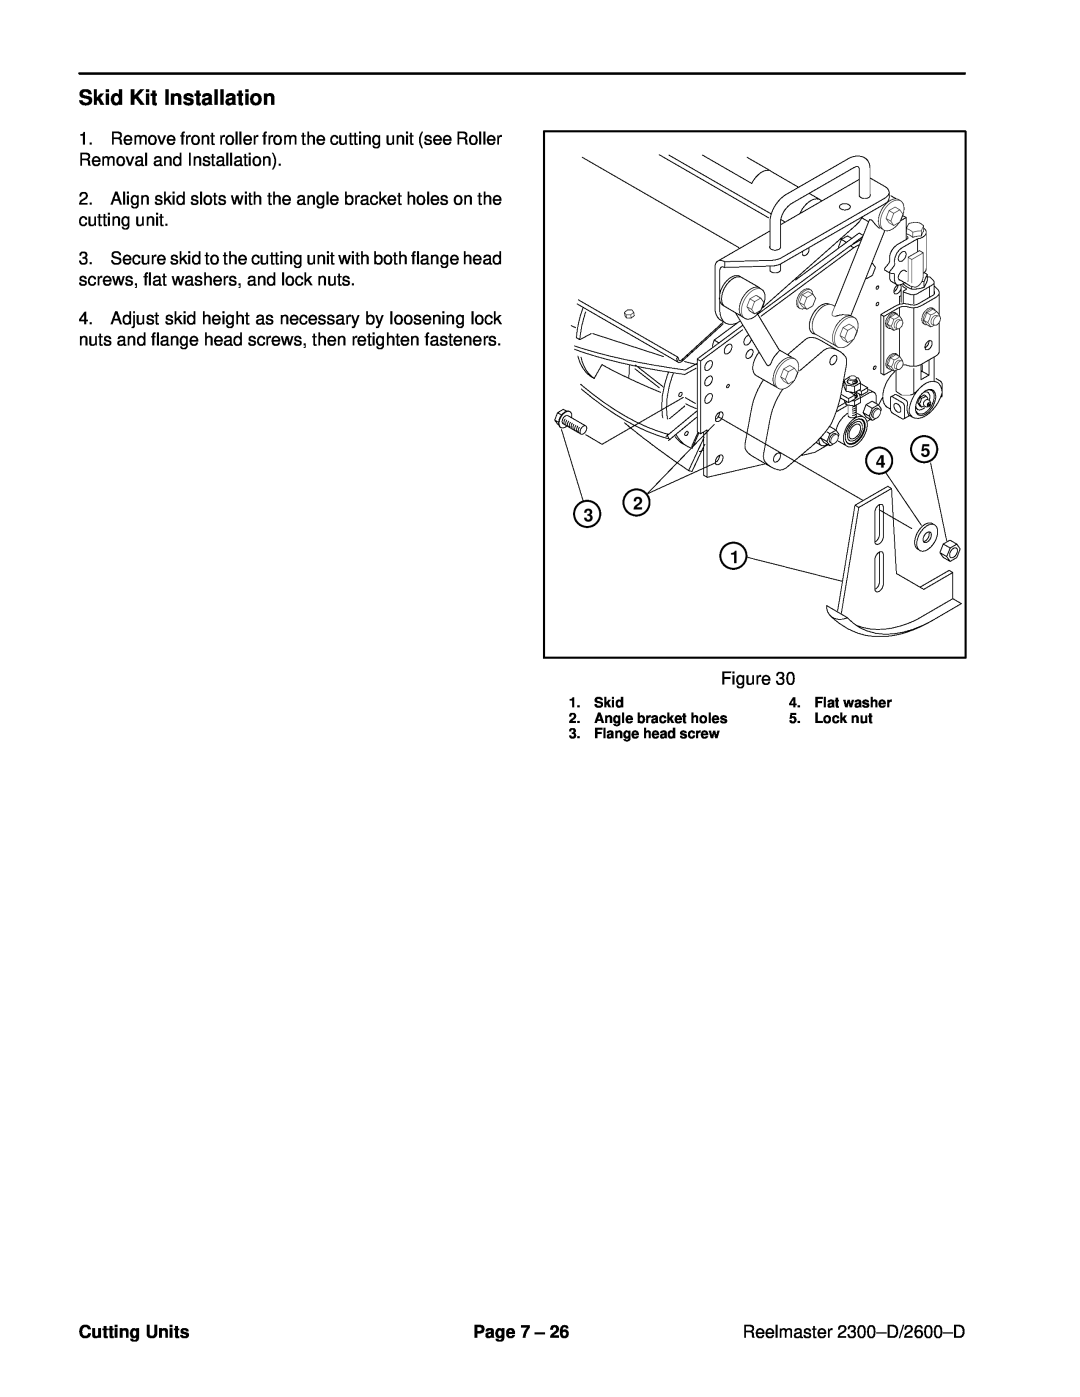 Toro 2300-D, 2600D service manual Skid Kit Installation, Cutting Units, Page 7 ±, Reelmaster 2300±D/2600±D 